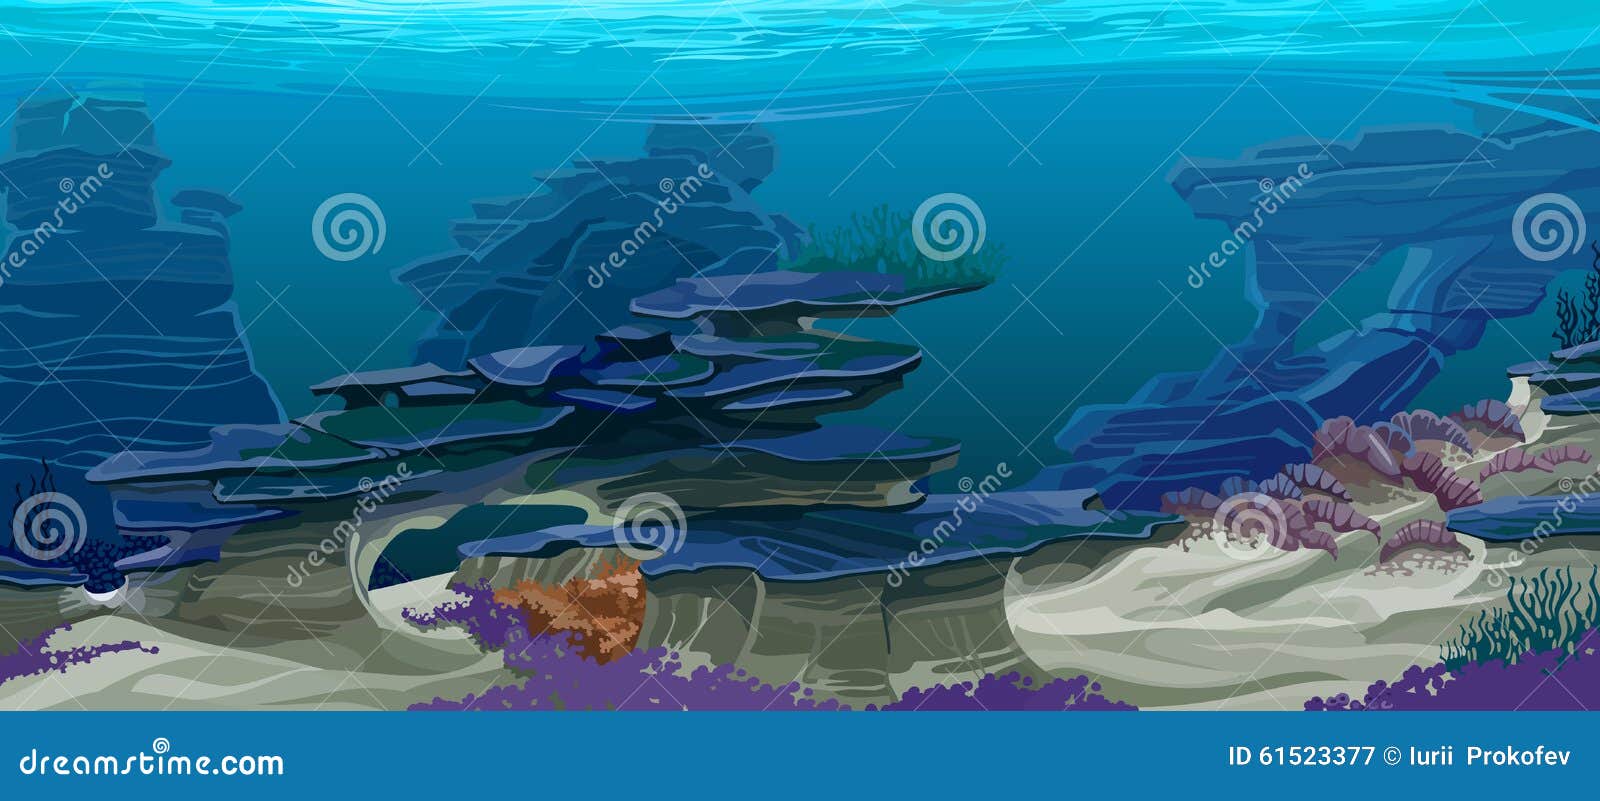 underwater topography